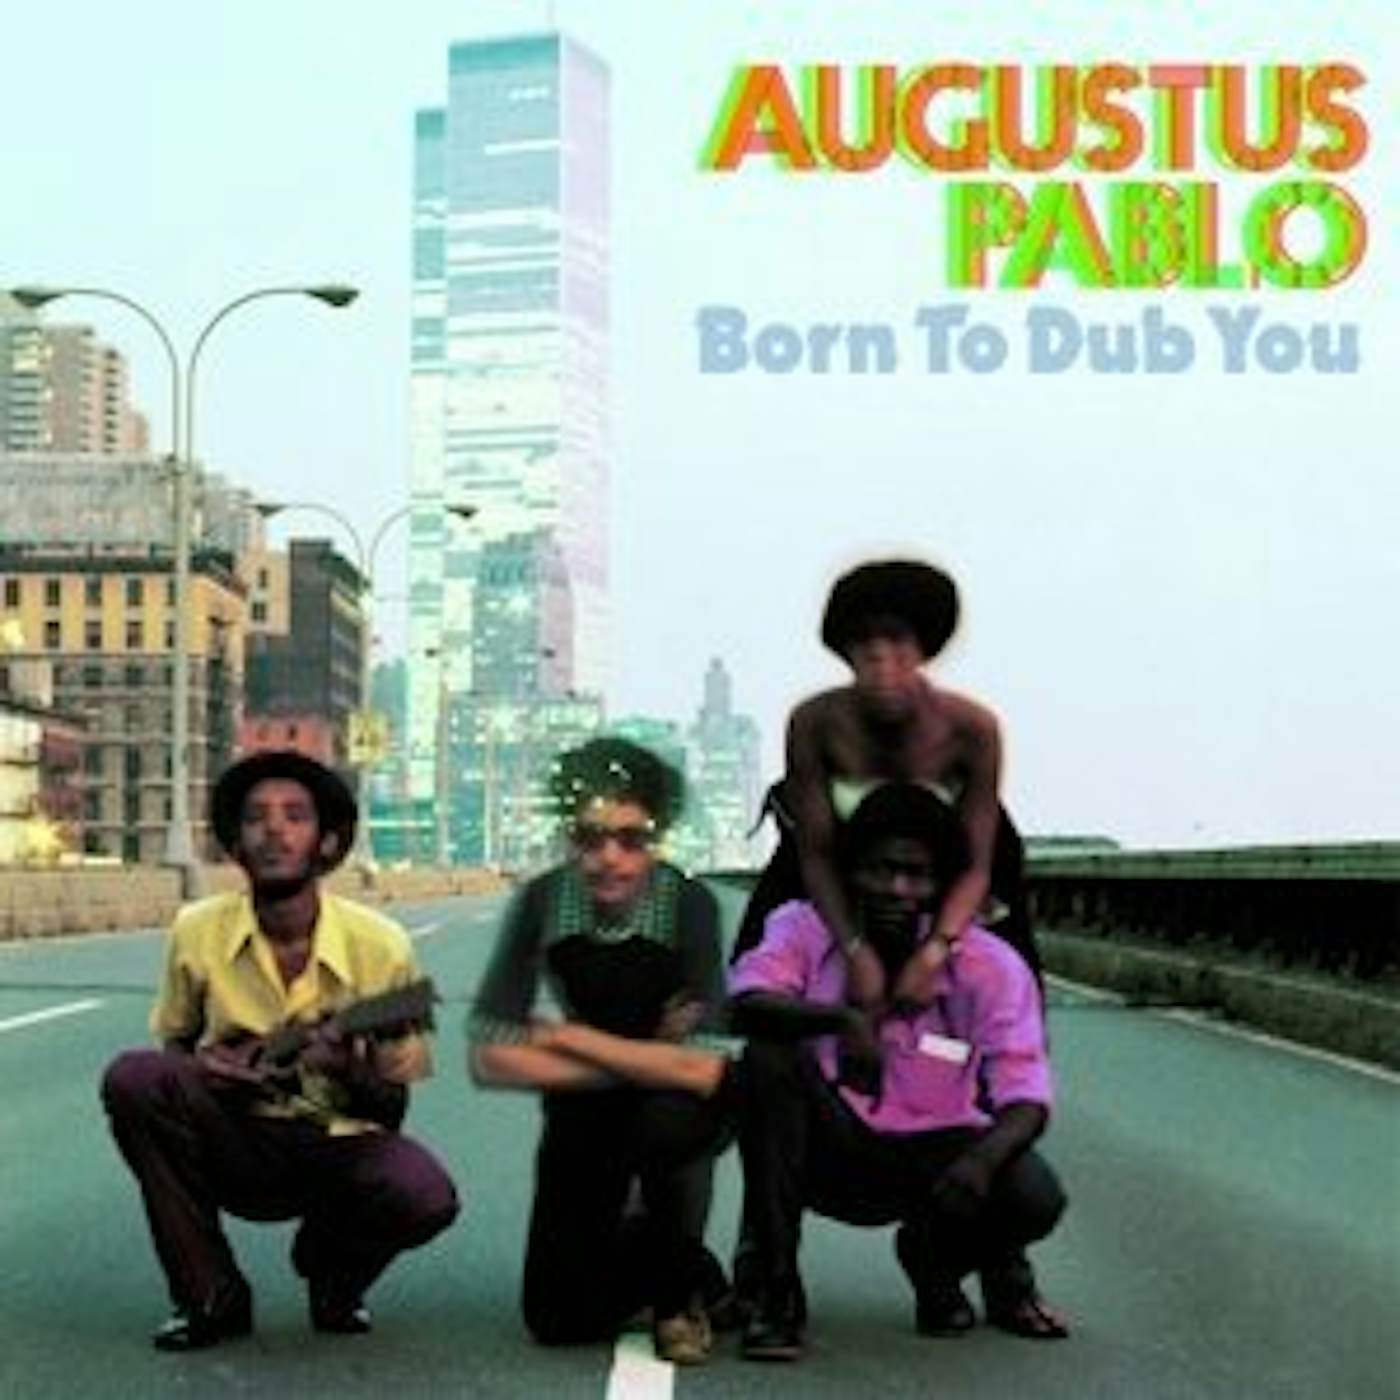 Augustus Pablo Born to Dub You Vinyl Record